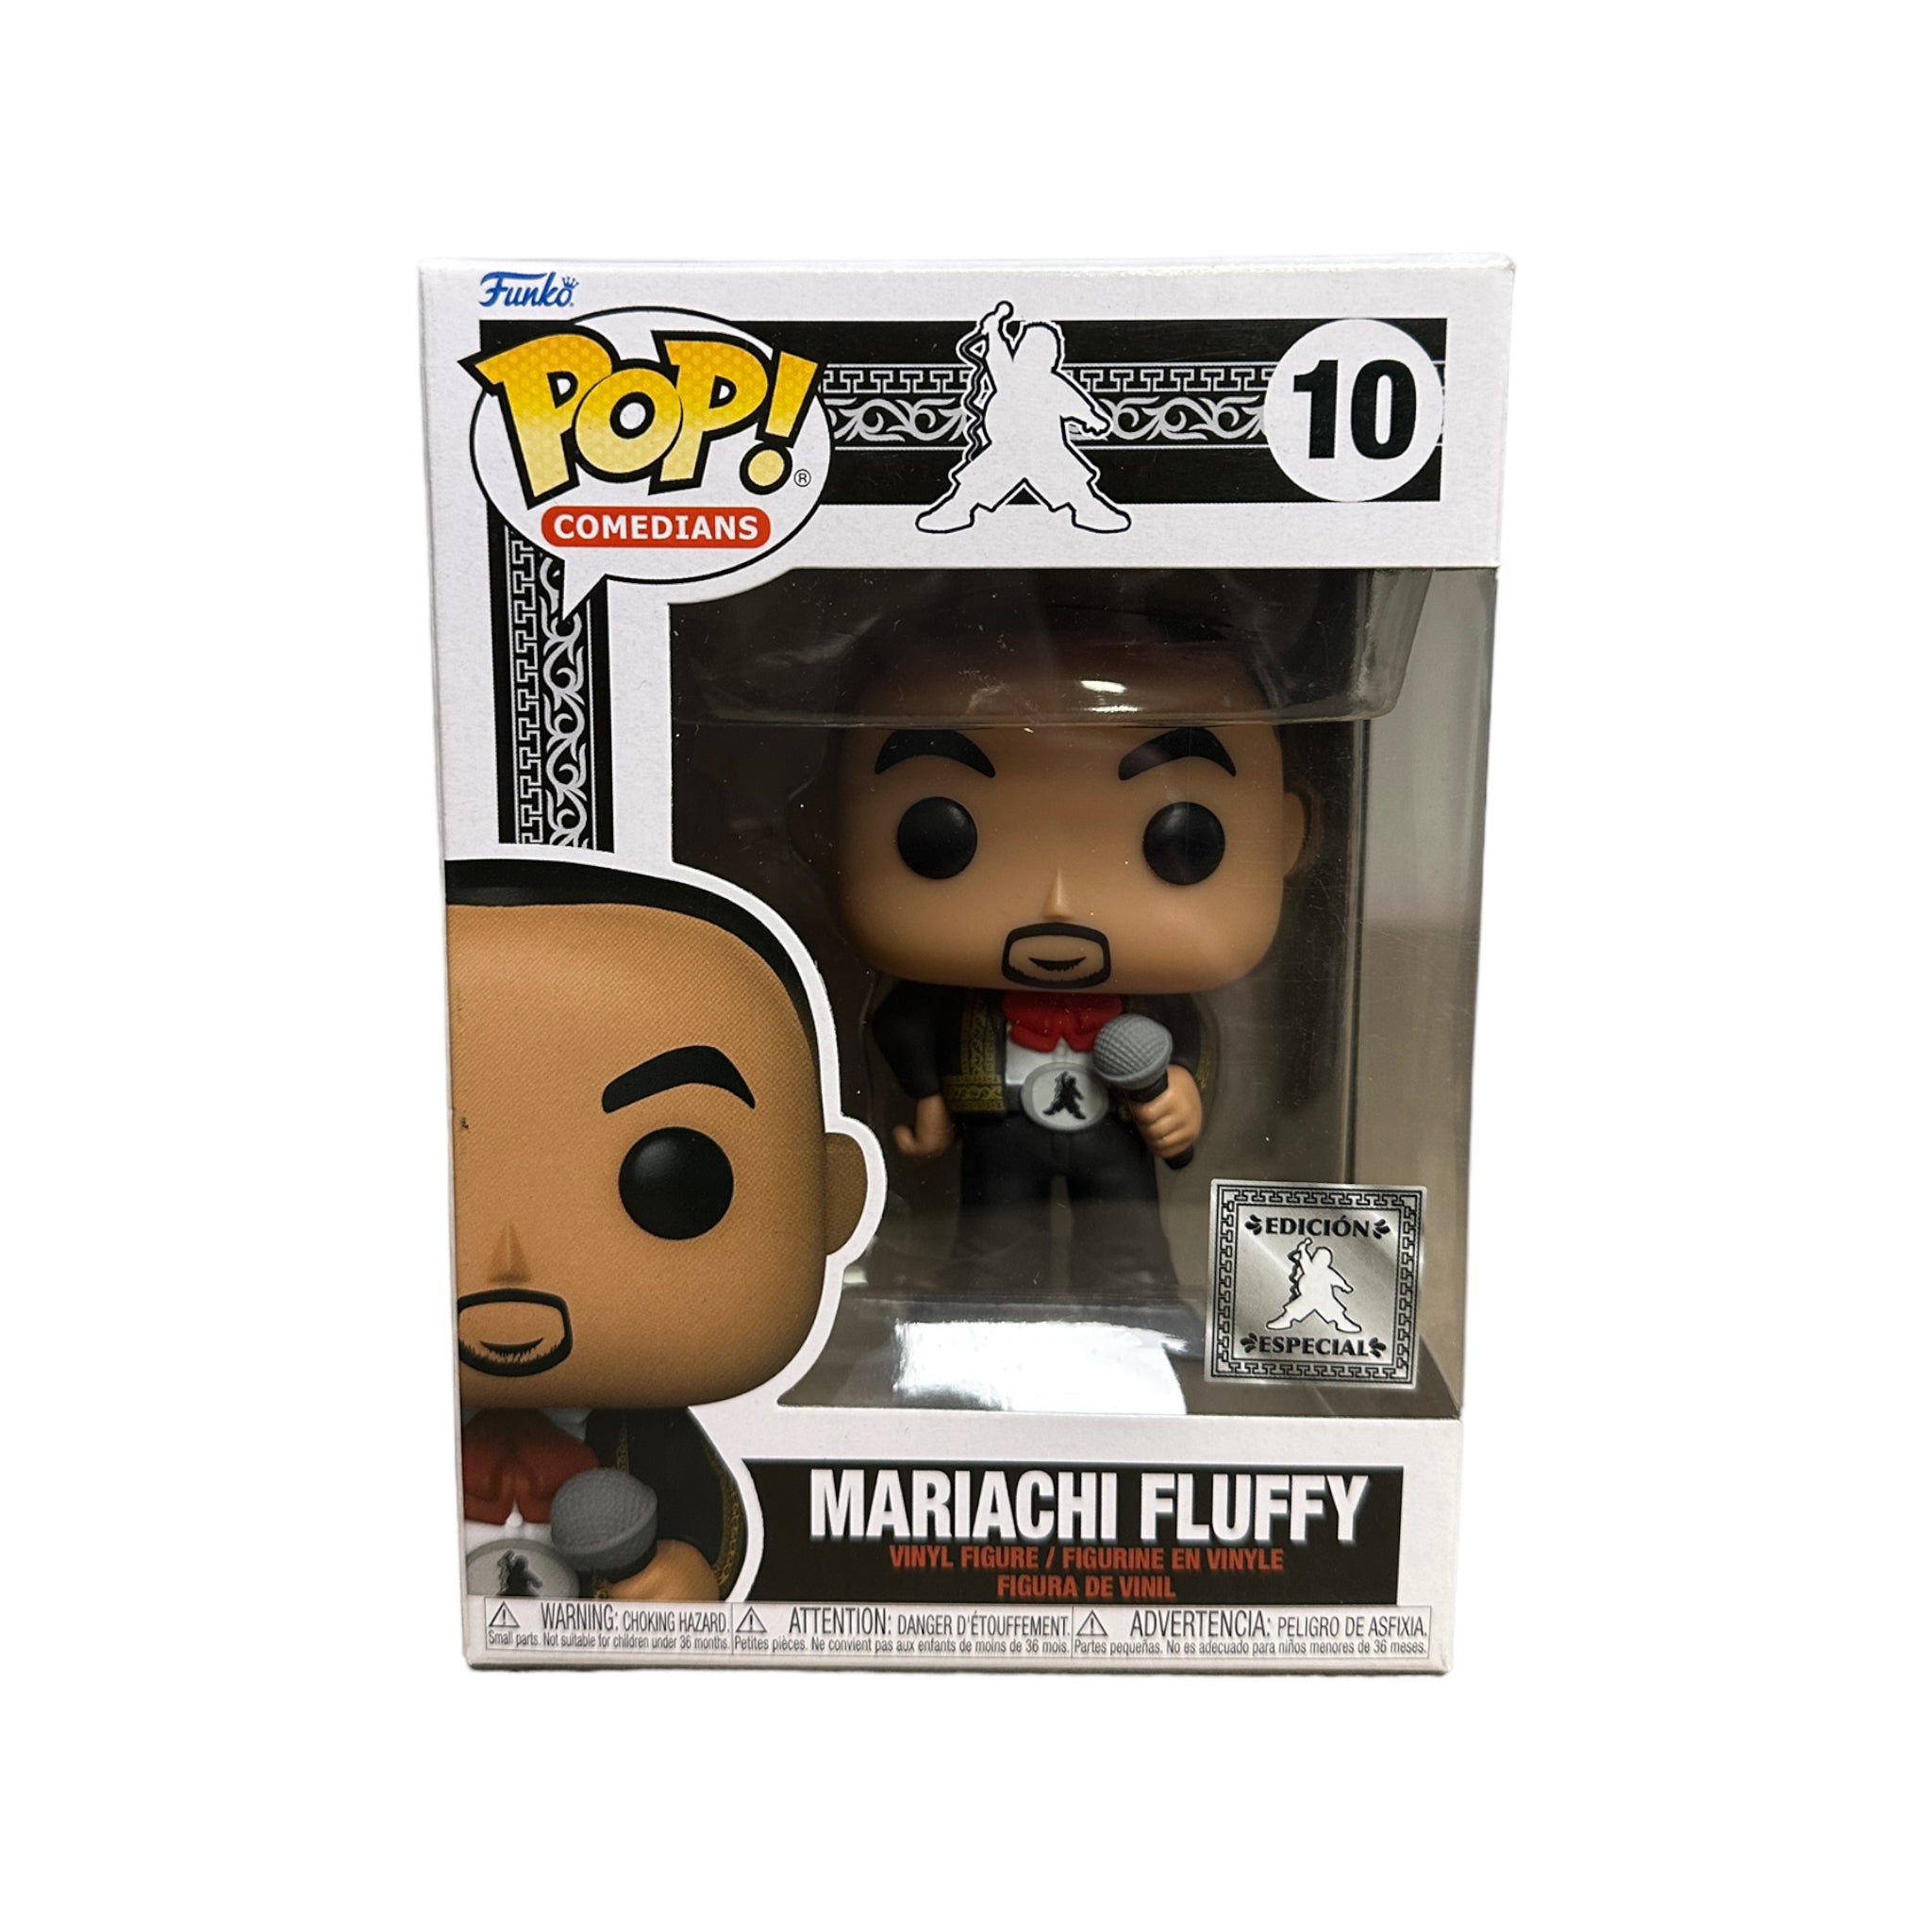 Mariachi Fluffy #10 Funko Pop! - Comedians - Special Edition - Condition 8.75/10